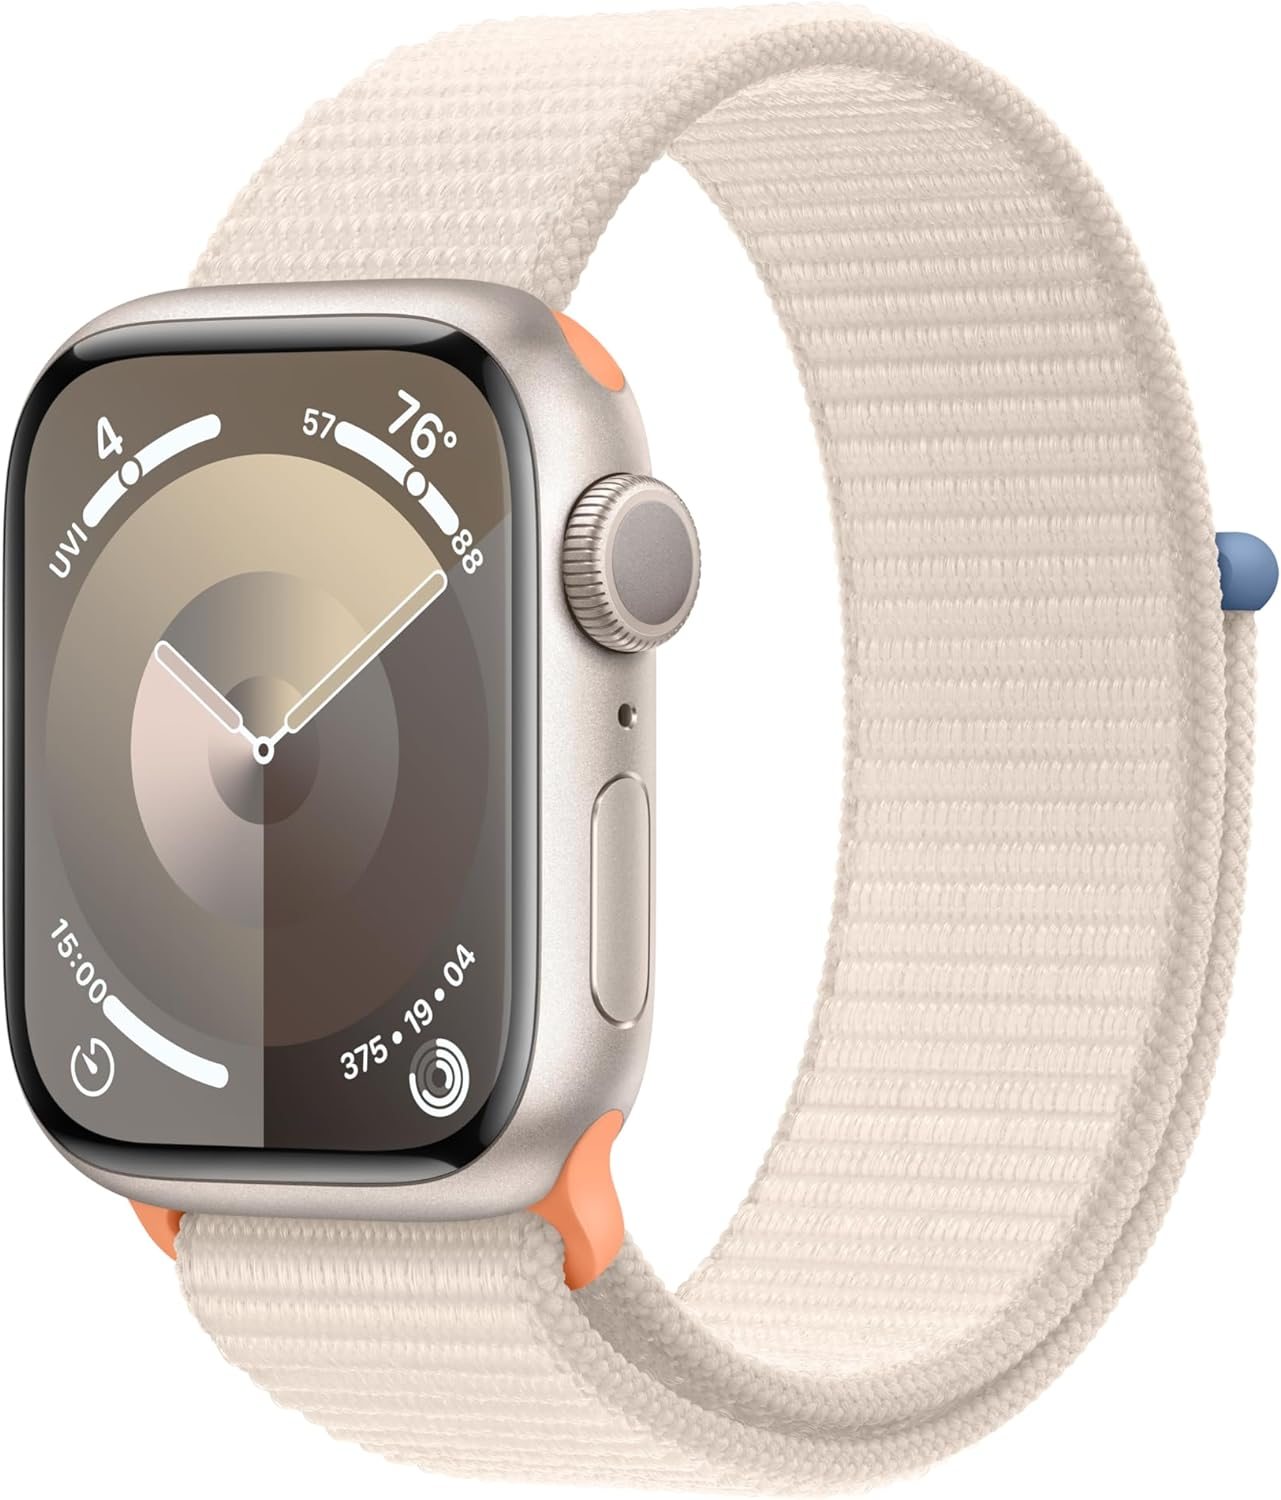 Apple Apple Watch Series 9 GPS